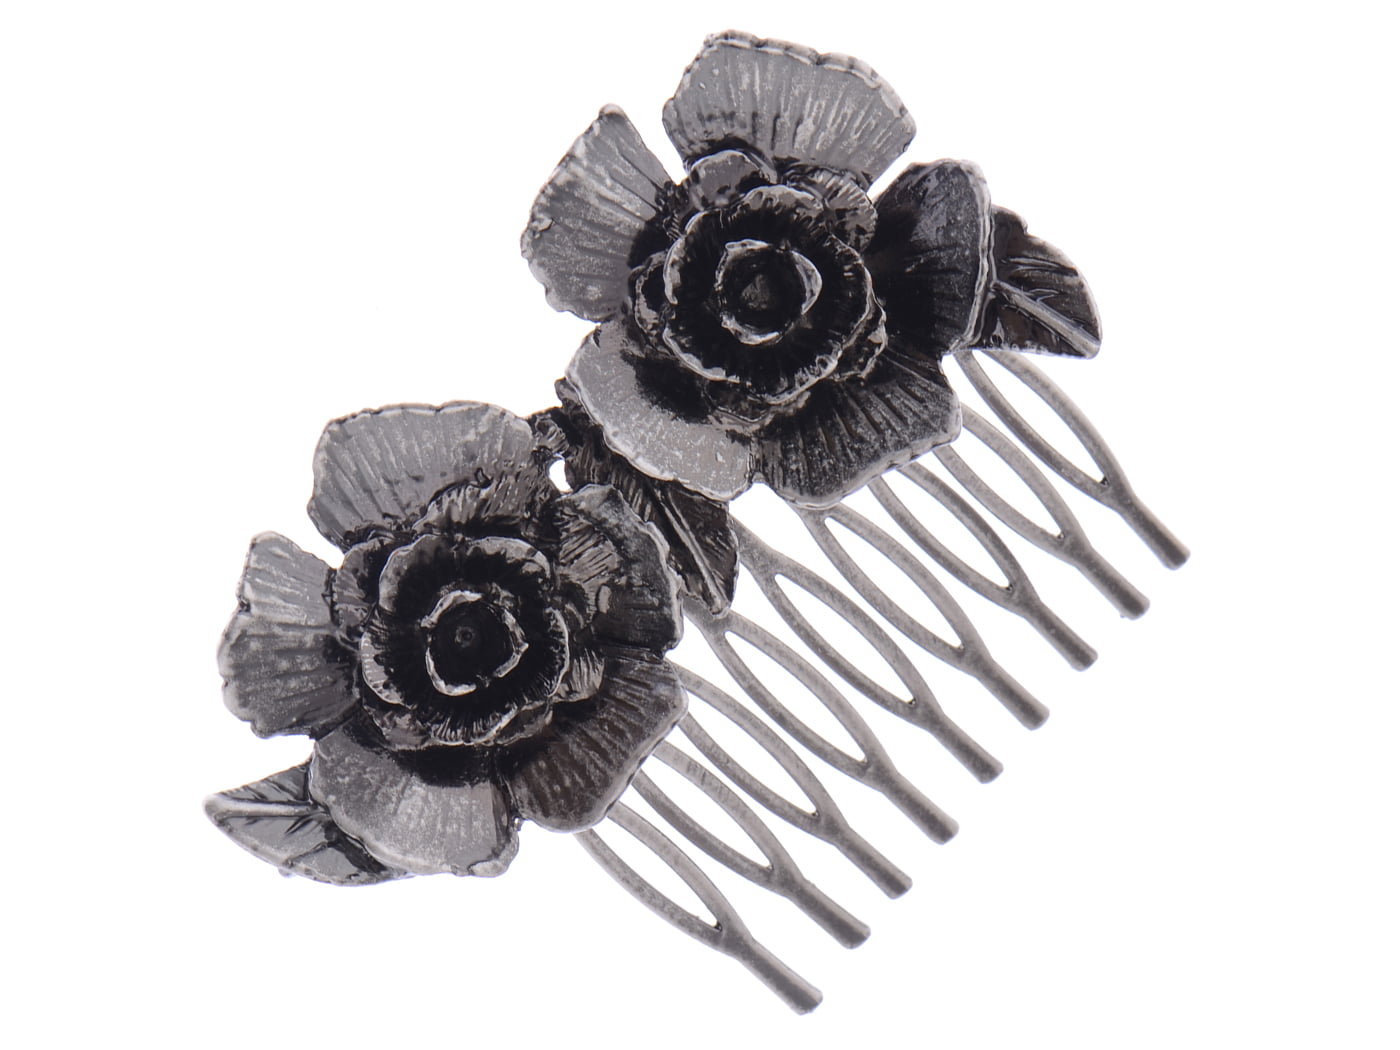 Wedding Floral Hair Pins Paper Flower Bobby Pins Flower Hair Pins Purple Rose Hair Pins